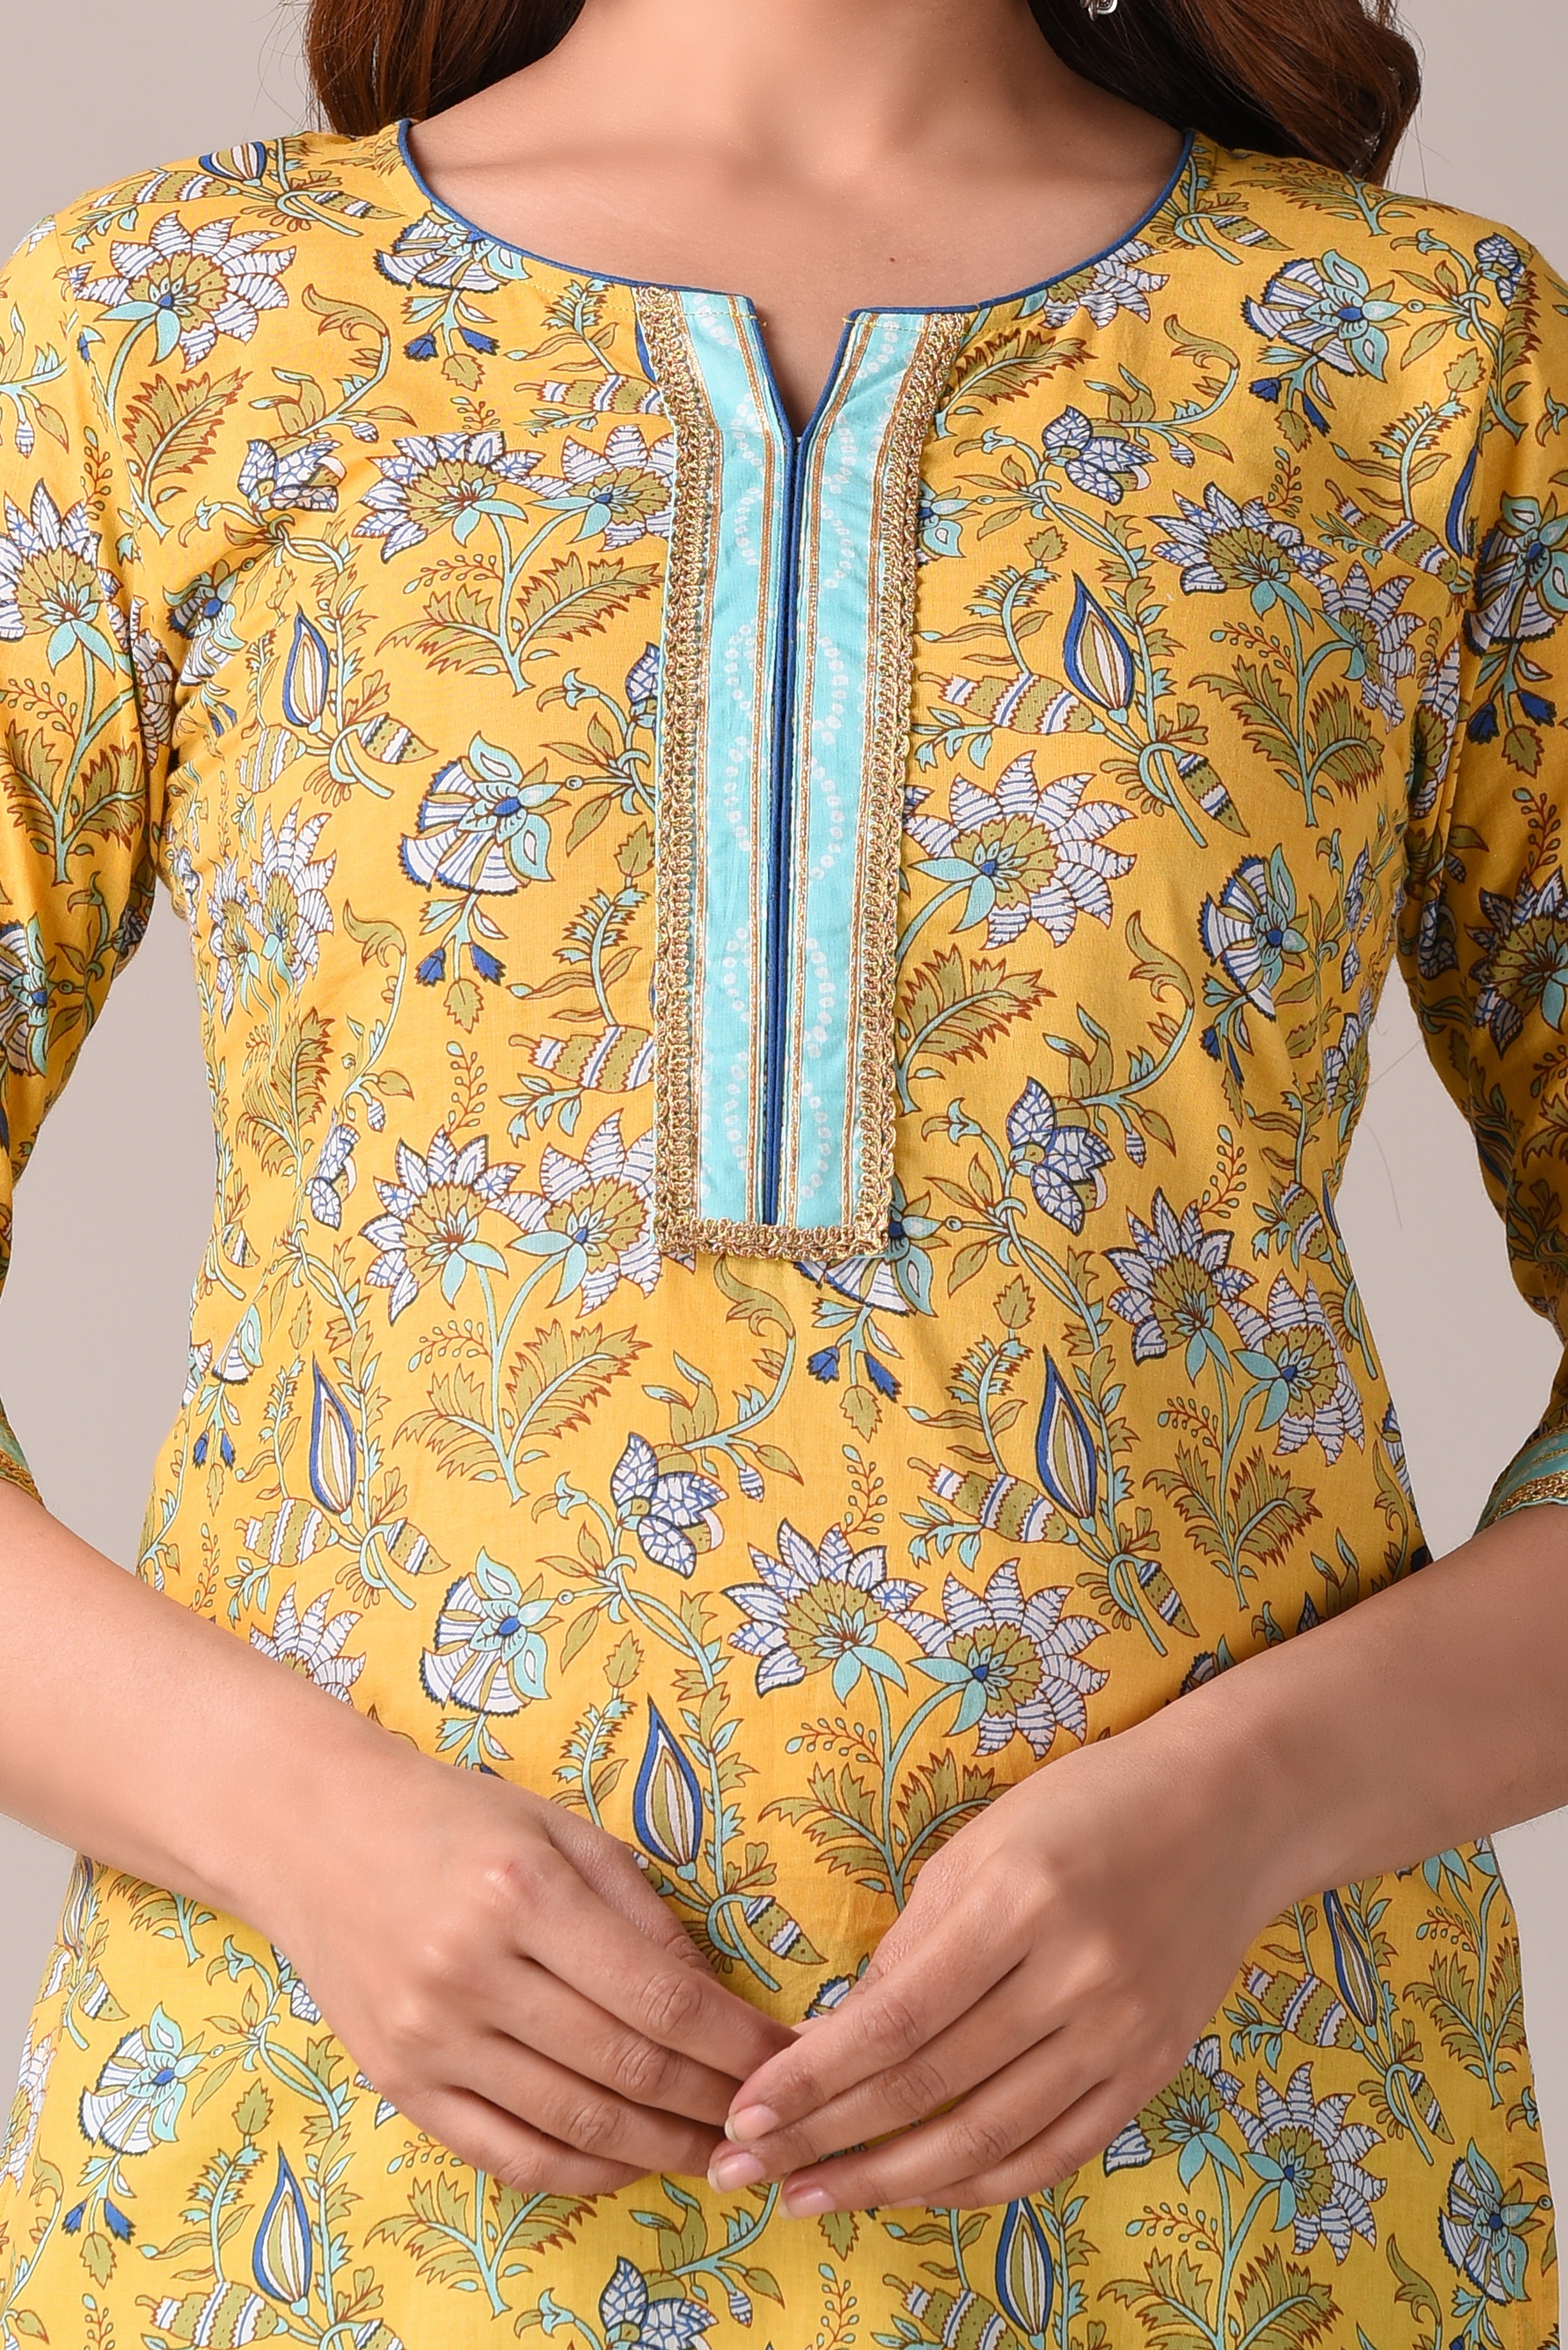 Yellow Floral Jaipuri Printed Pure Cotton Kurta, Pant And Dupatta Set